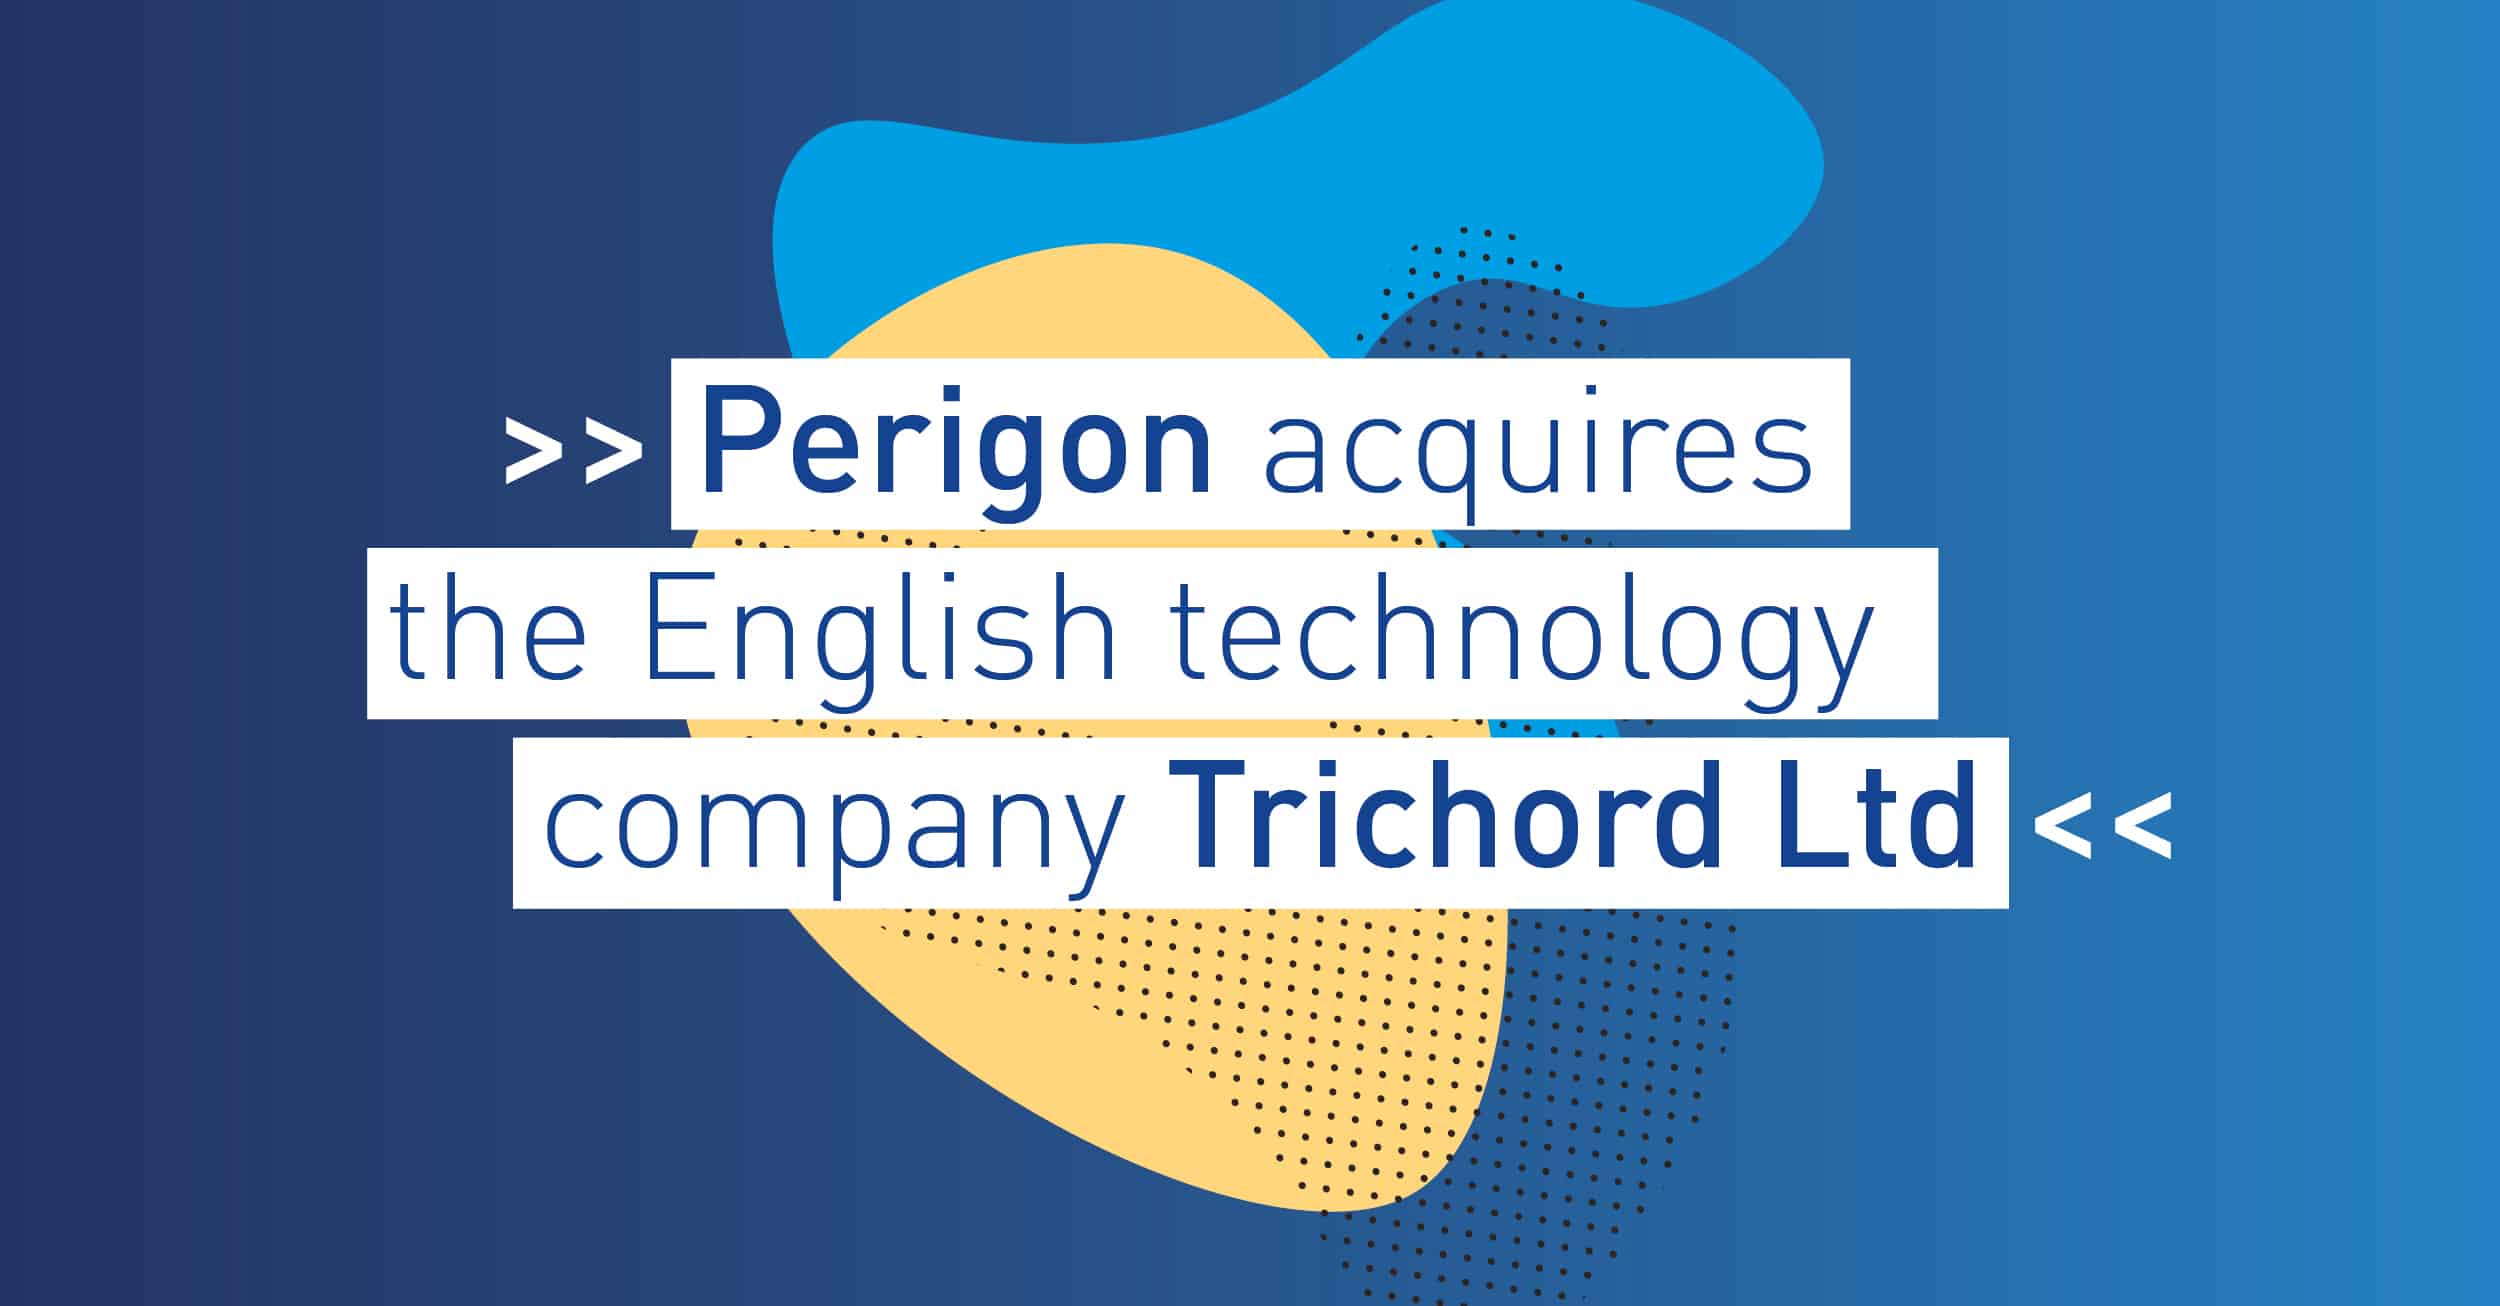 PERIGON ACQUIRES THE ENGLISH TECHNOLOGY COMPANY TRICHORD LTD.